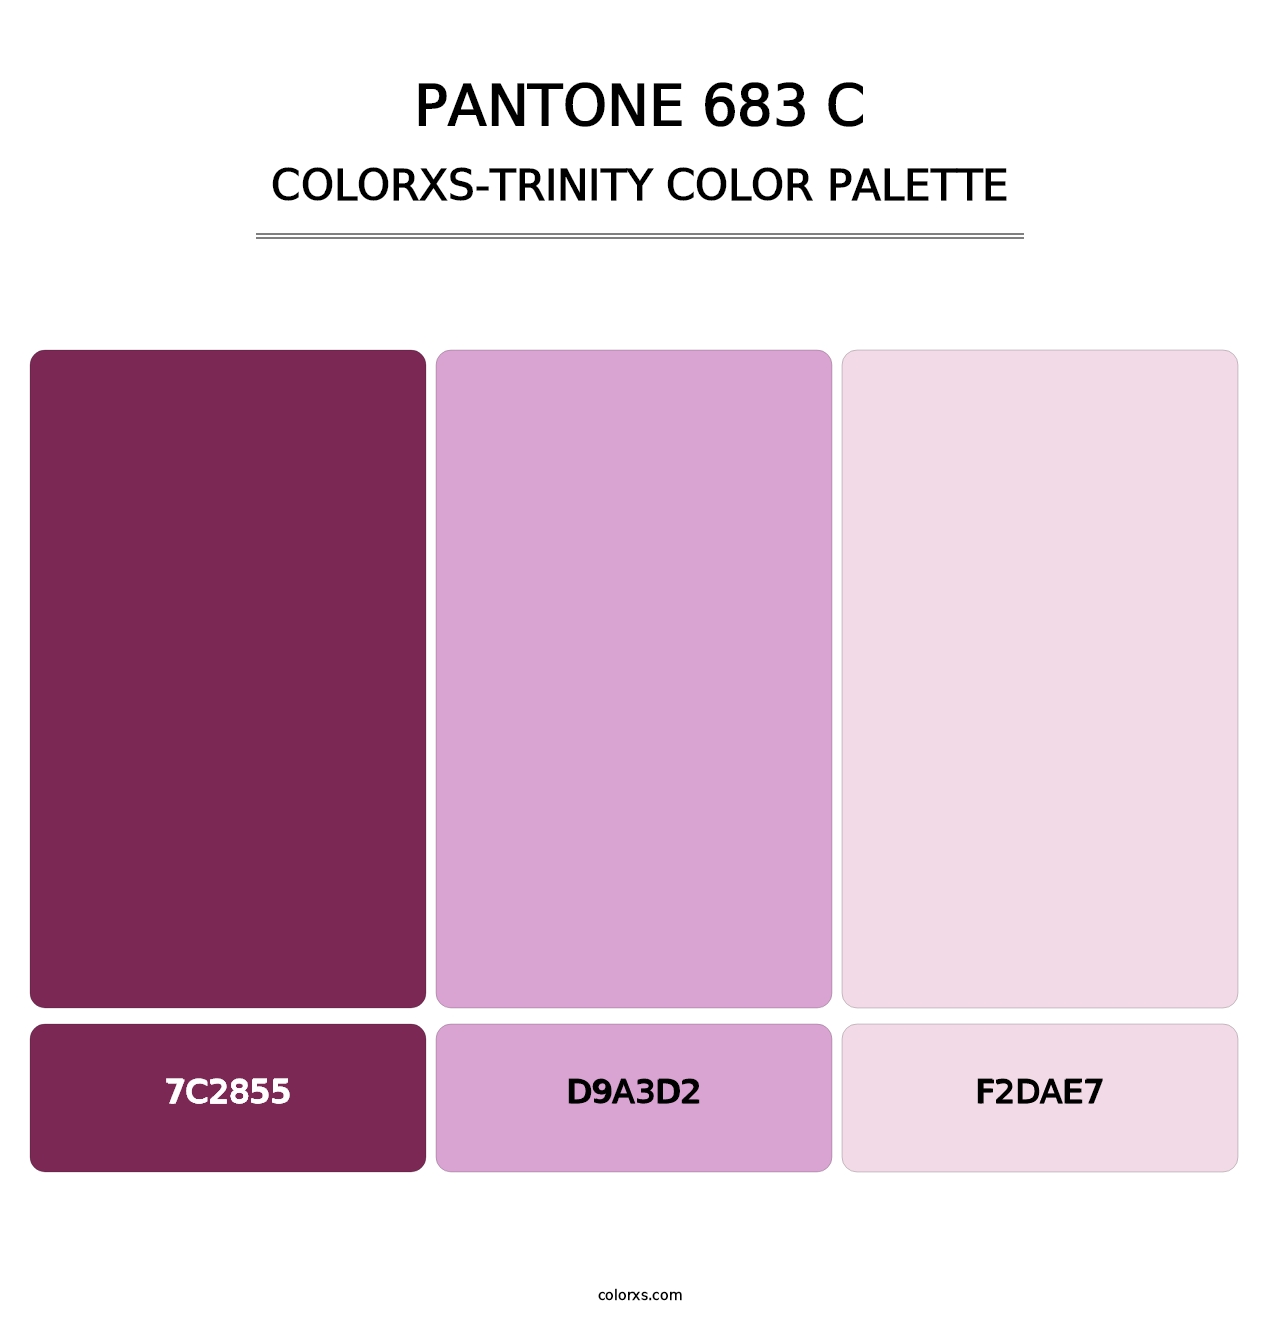 PANTONE 683 C - Colorxs Trinity Palette